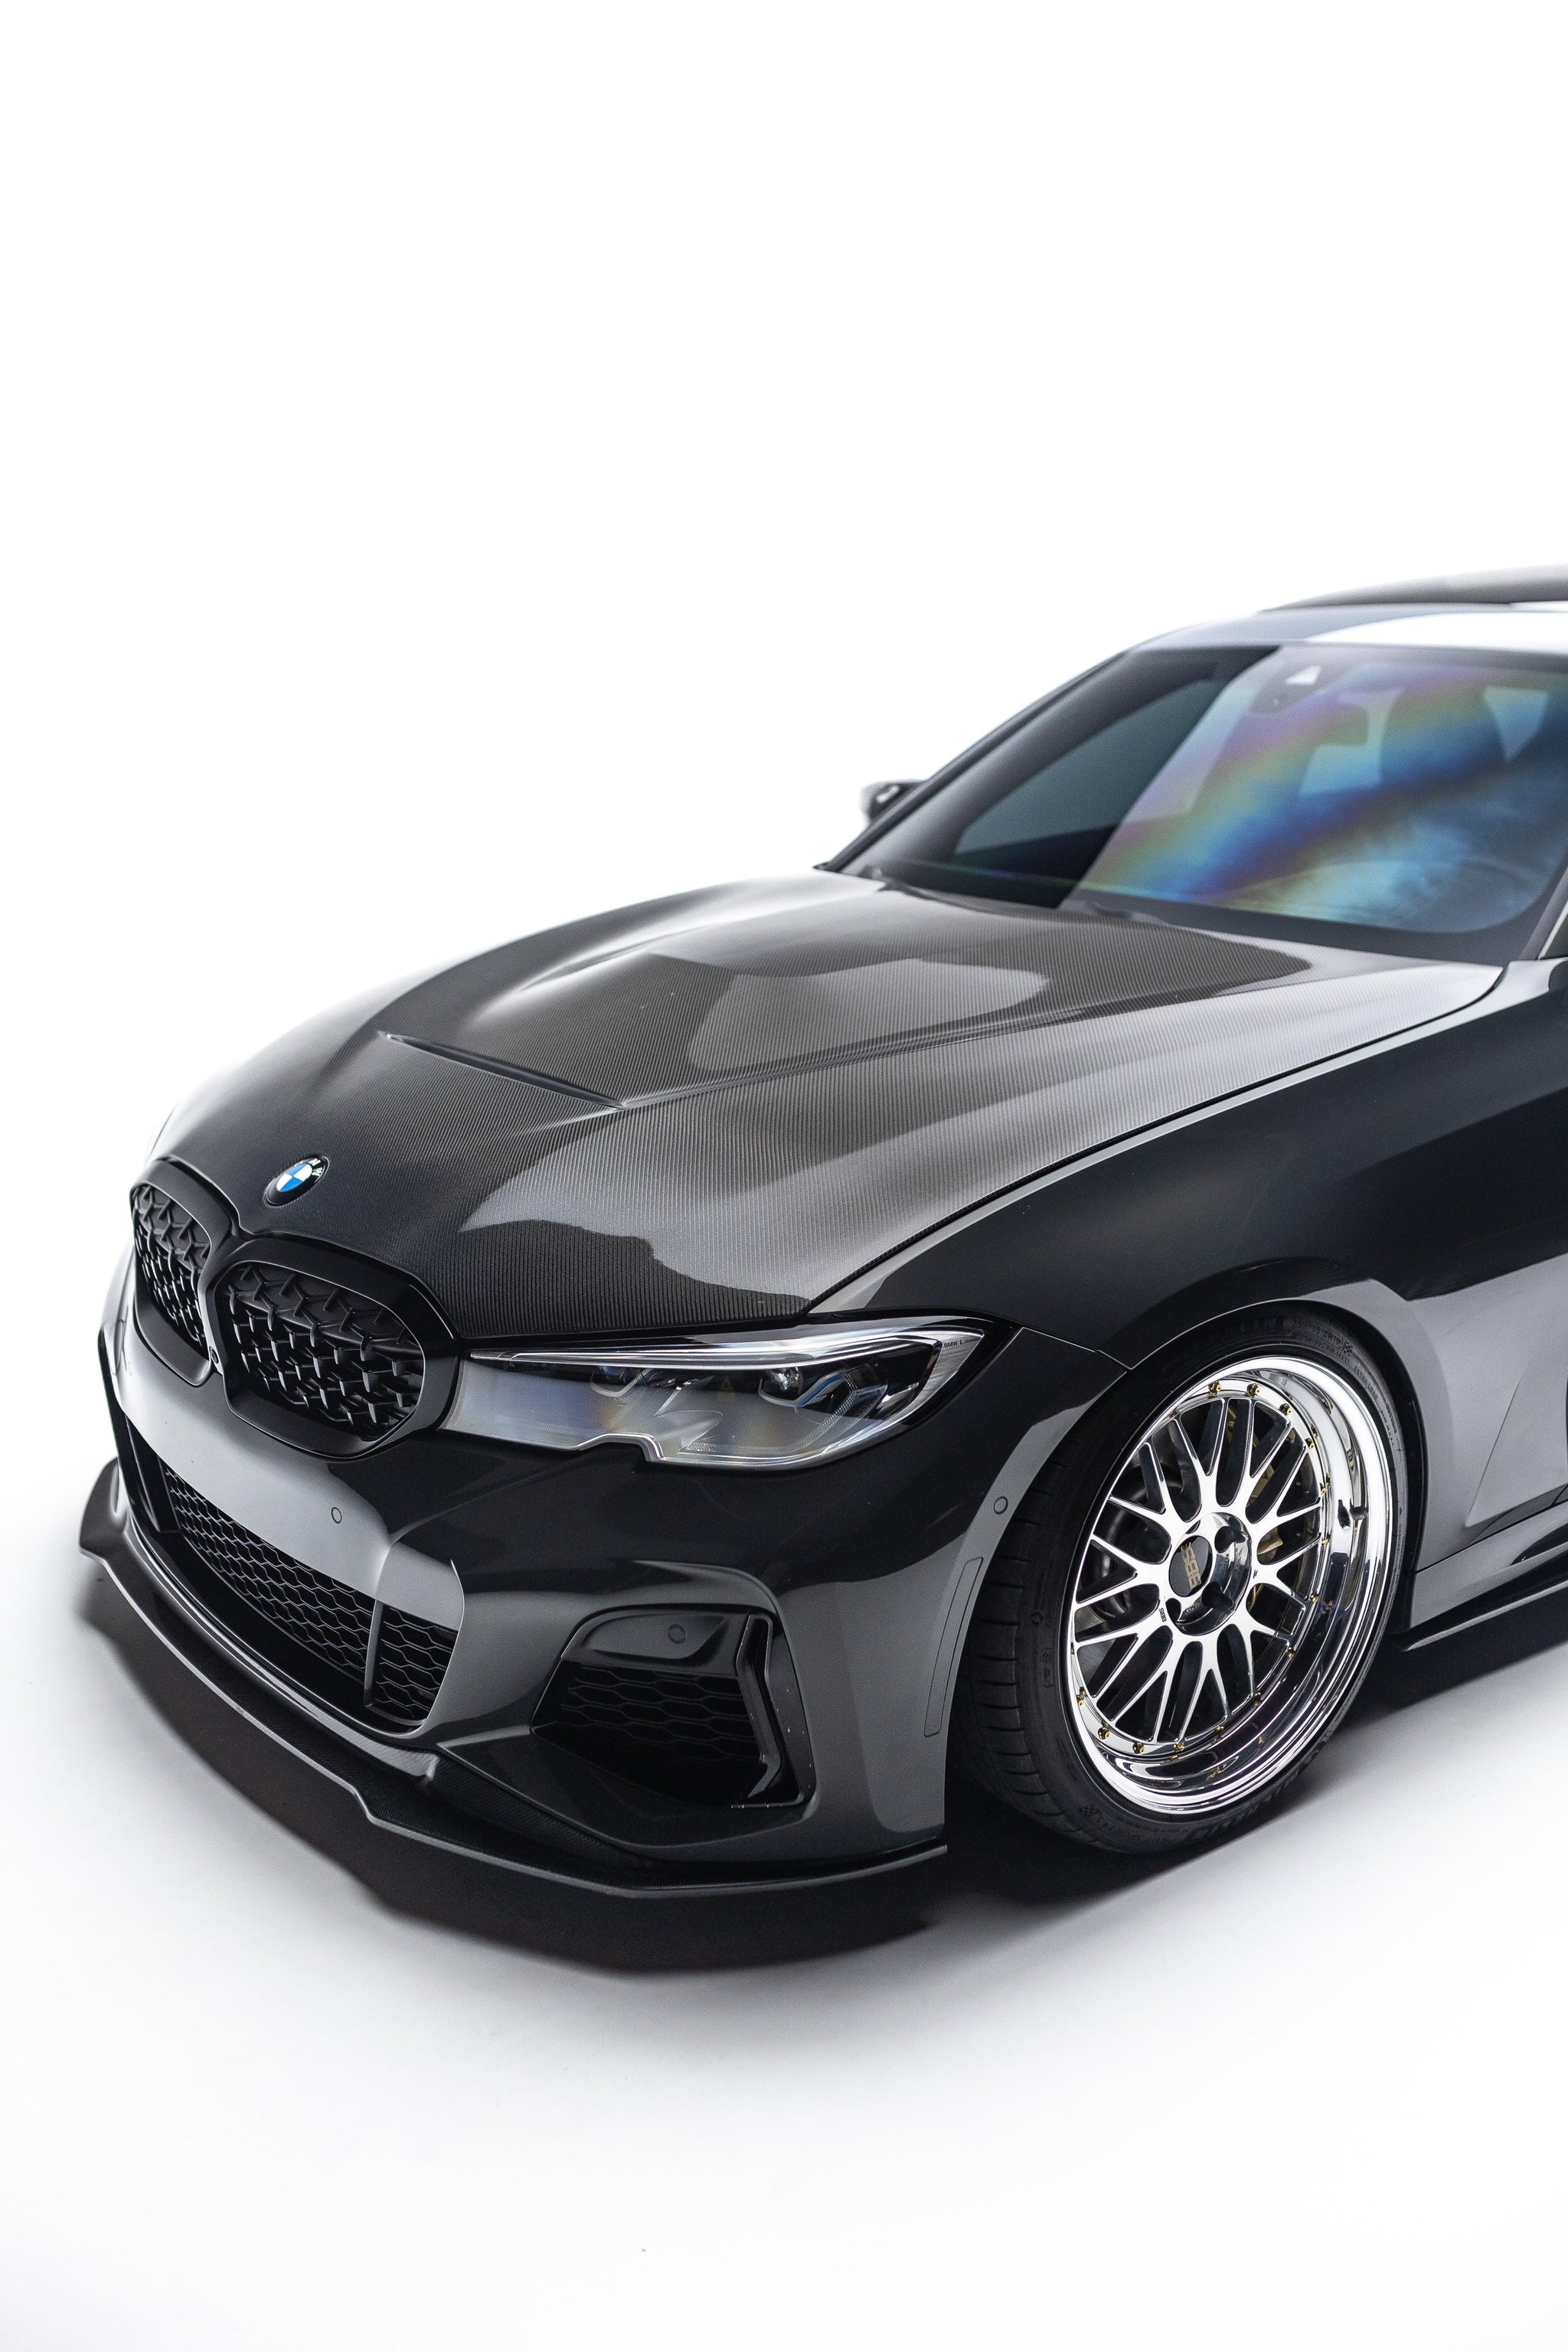 AERO DESIGN - BMW 3 SERIES G20 CARBON FIBRE BONNET – Aero Carbon UK